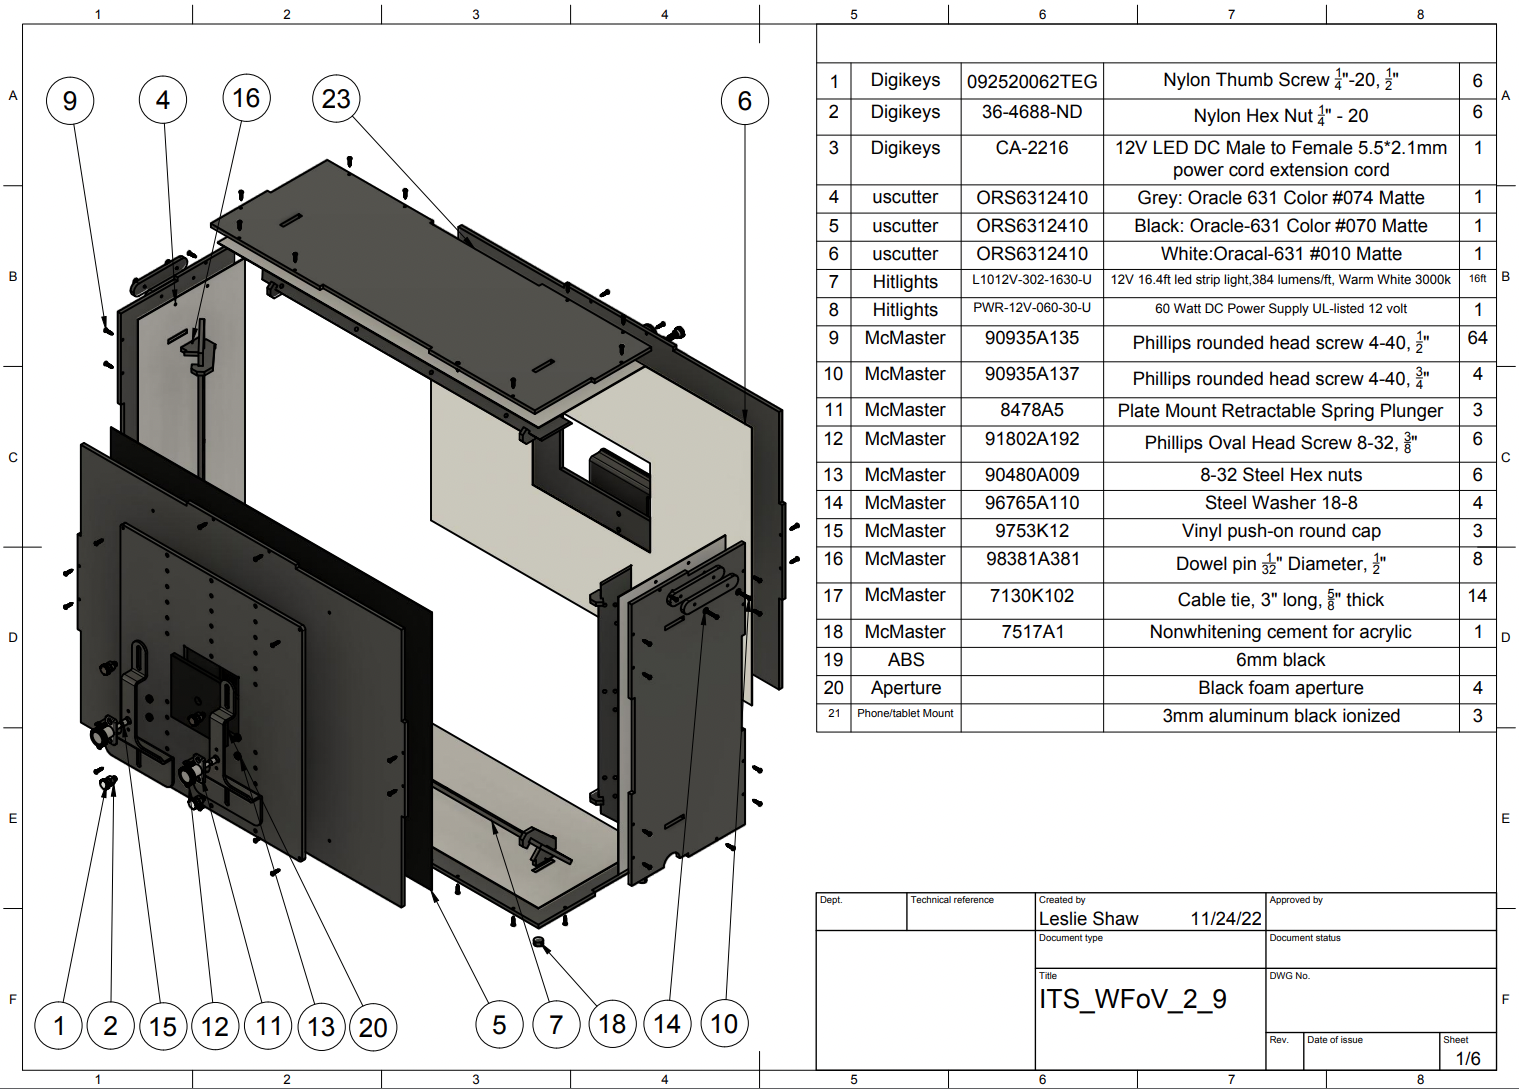 Disegno CAD del WFOV ITS-in-a-box